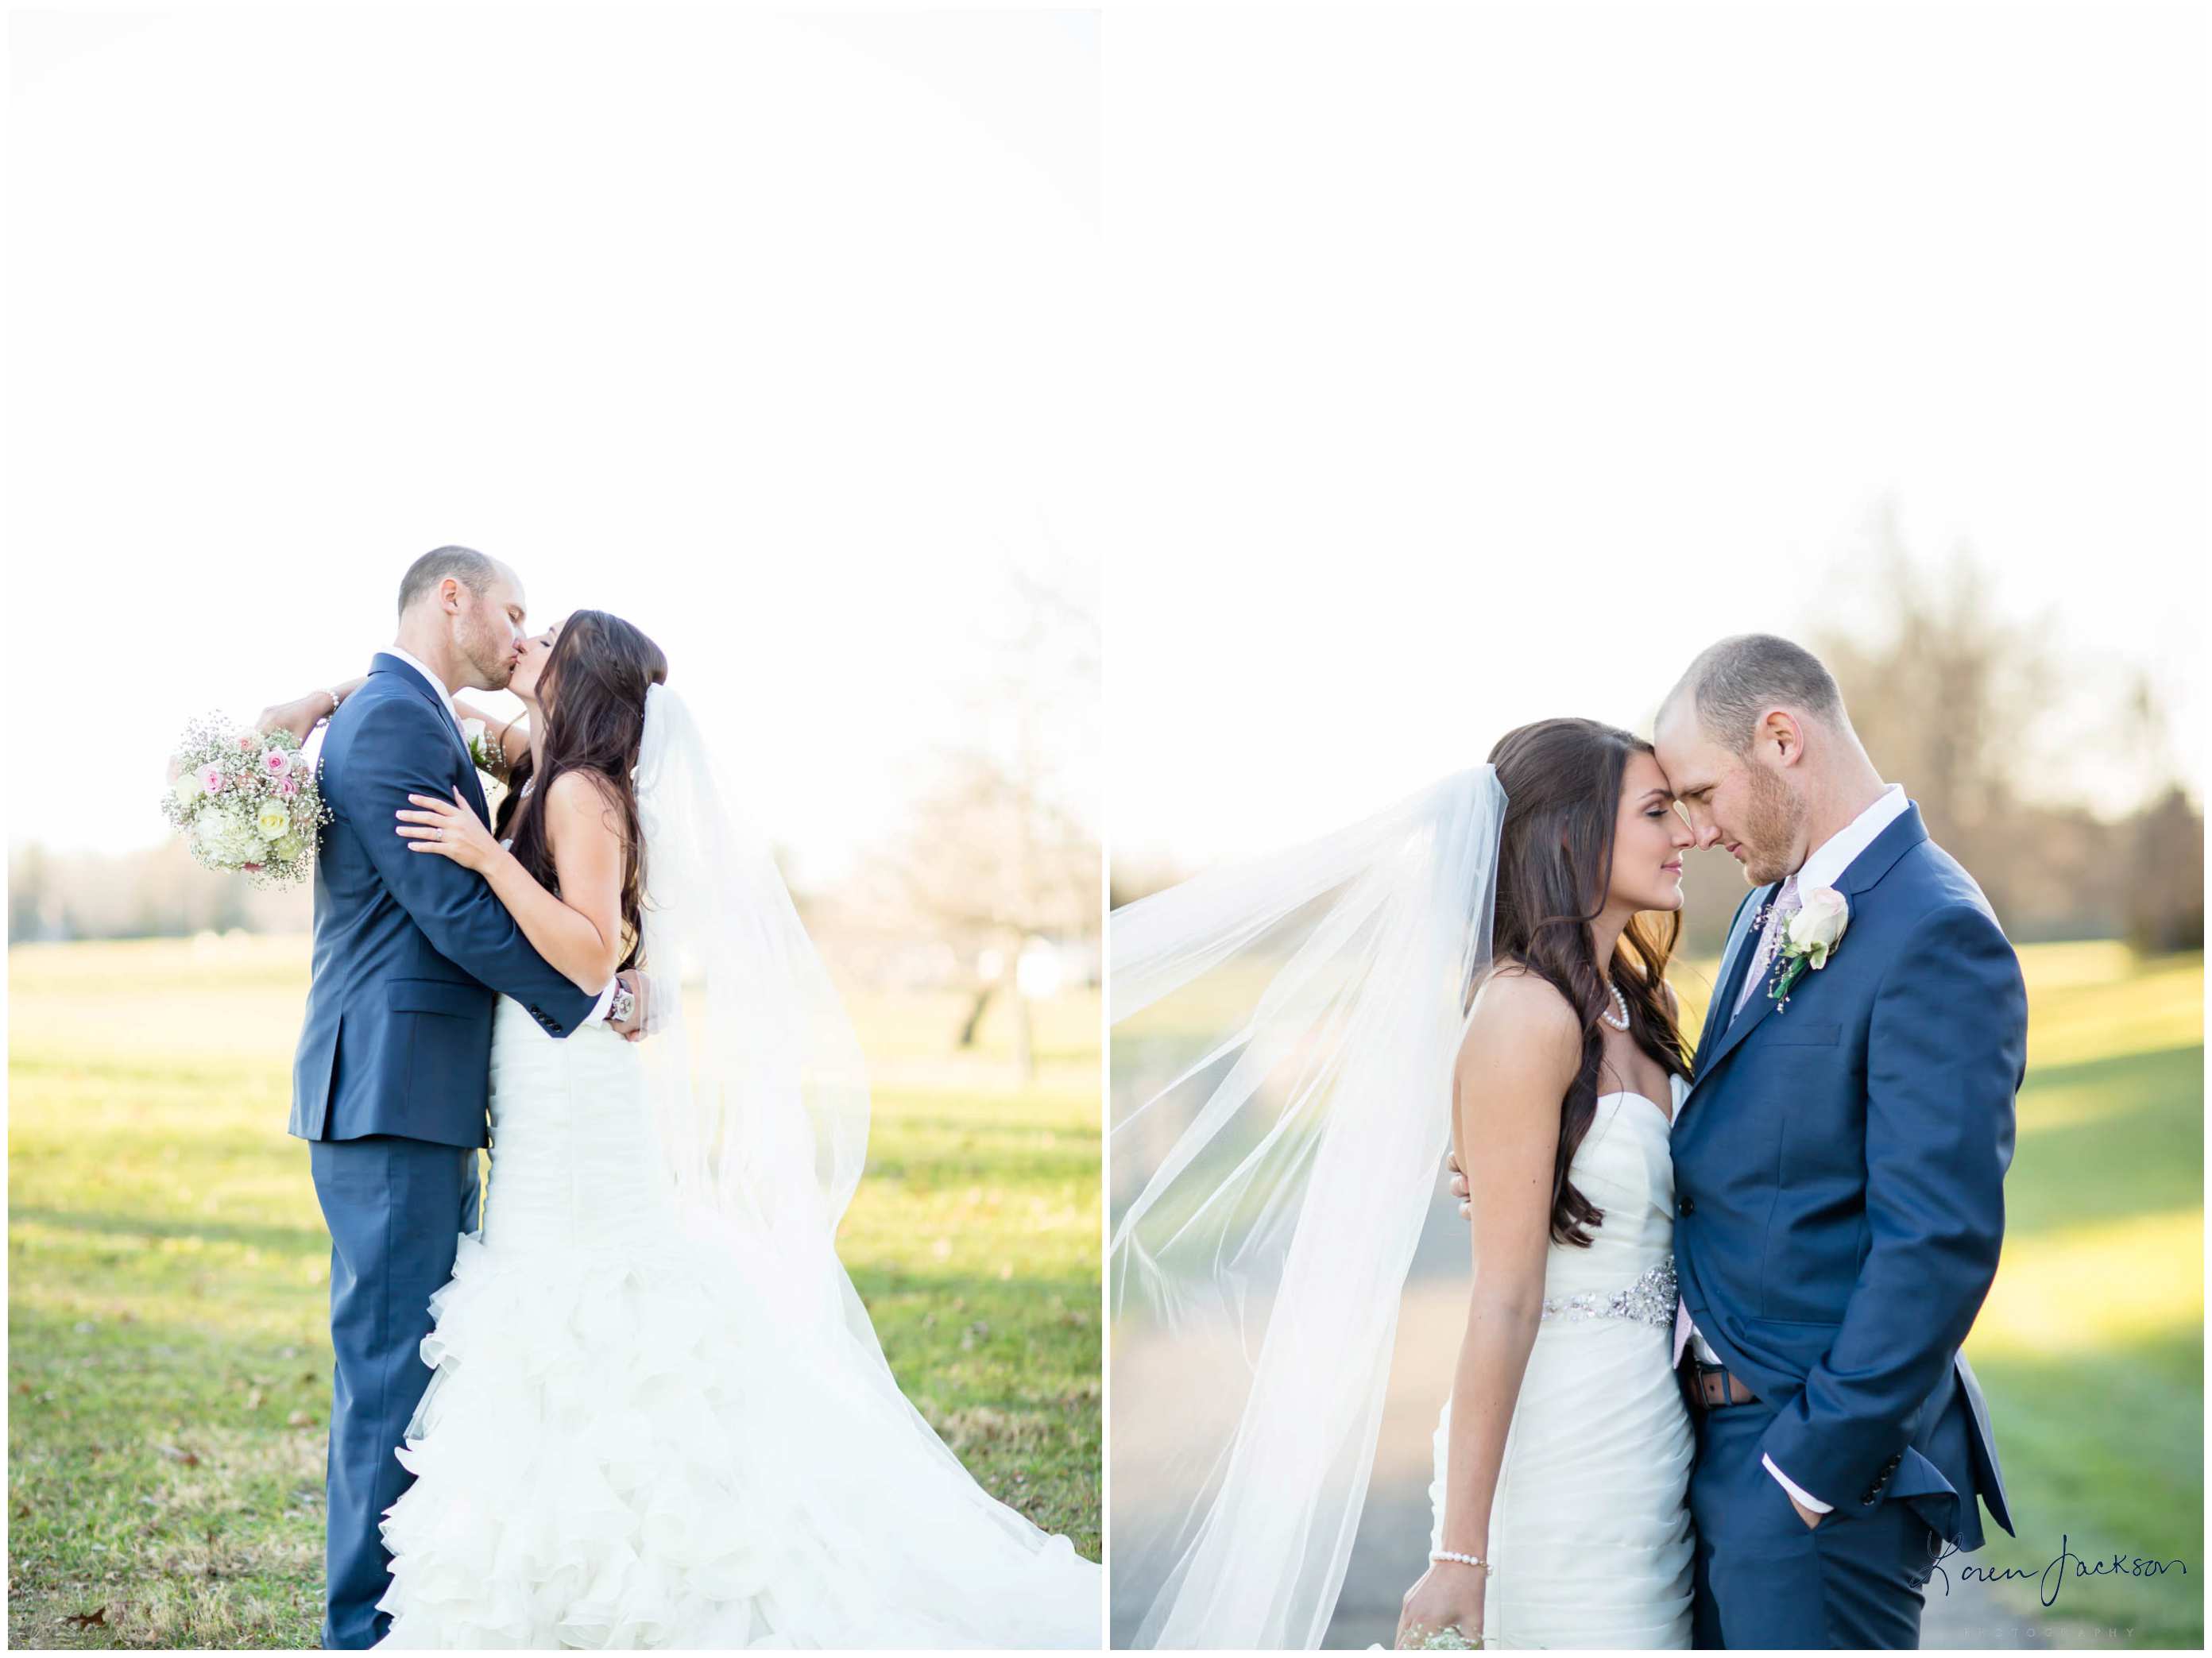 Loren-Jackson-Photography-brookside-farm-fall-wedding-55.jpg